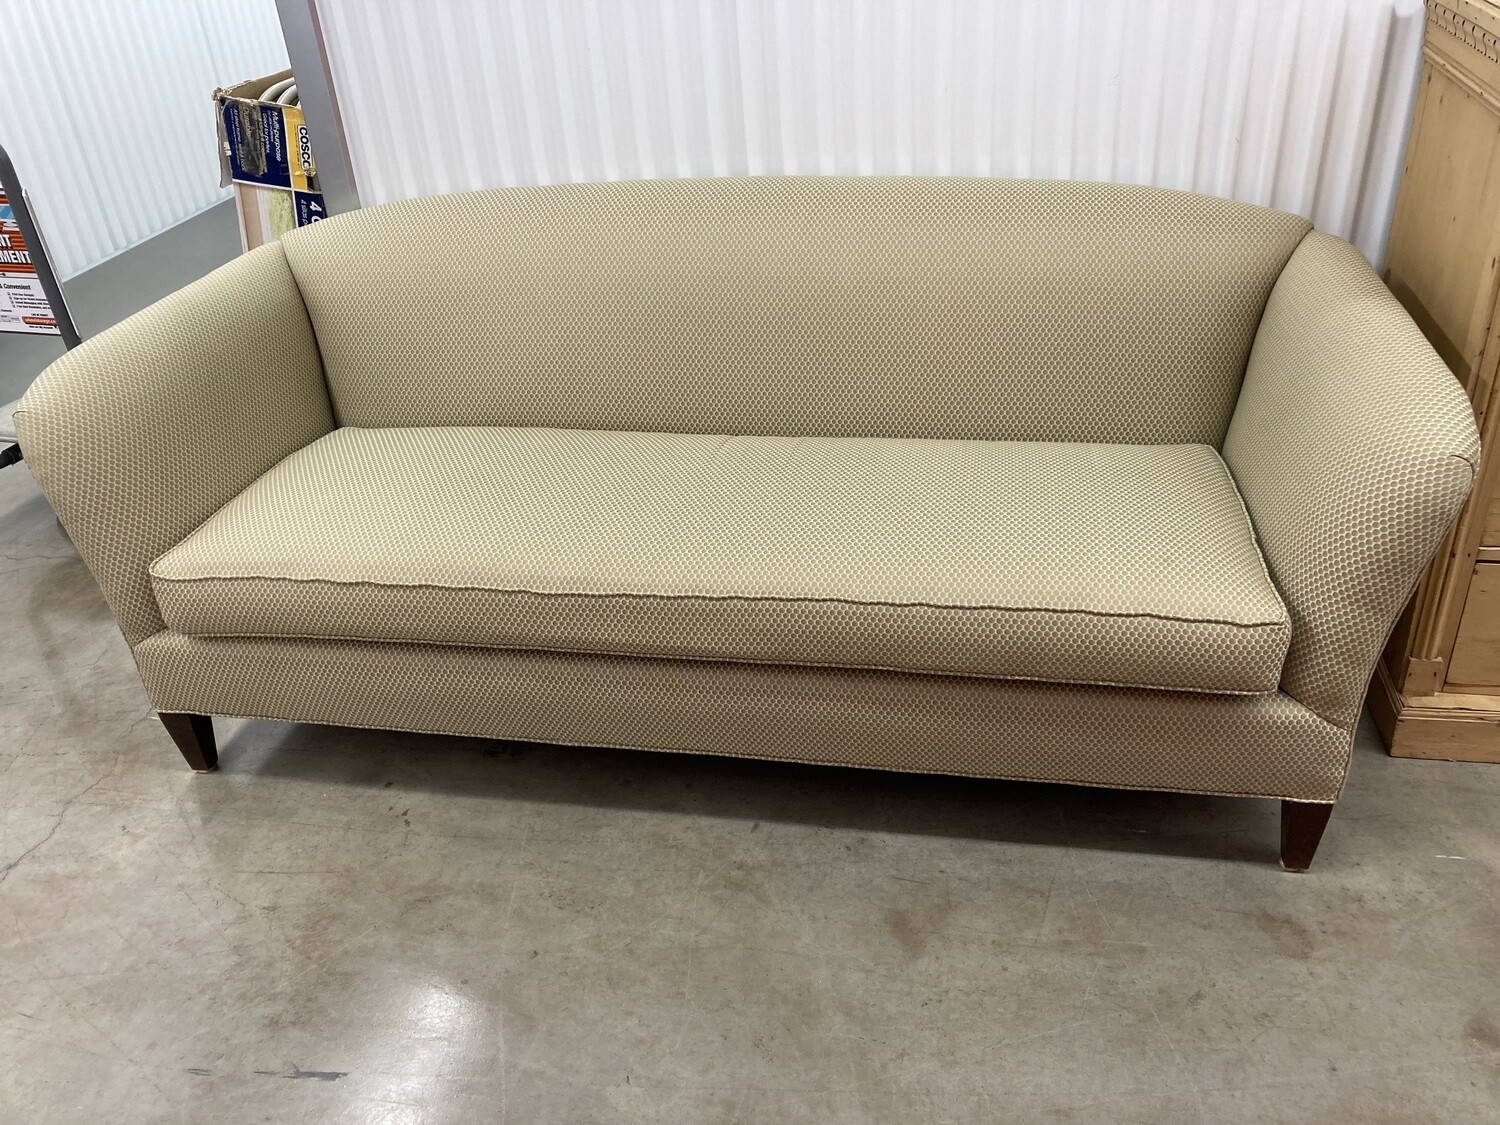 Light Green Sofa, honeycomb design, nice shape! # 2214